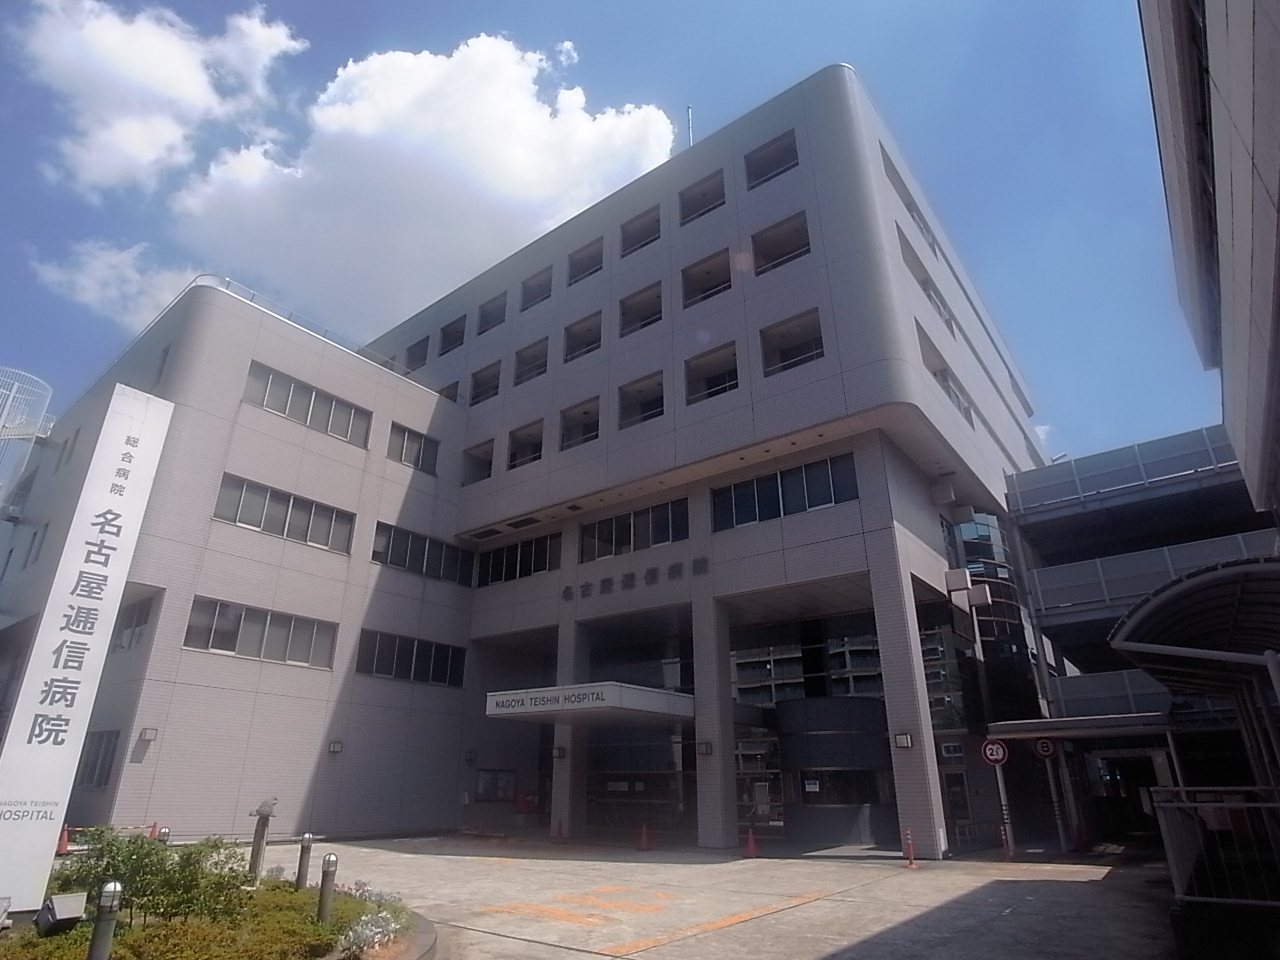 Hospital. 531m to Nagoya Teishin hospital (hospital)